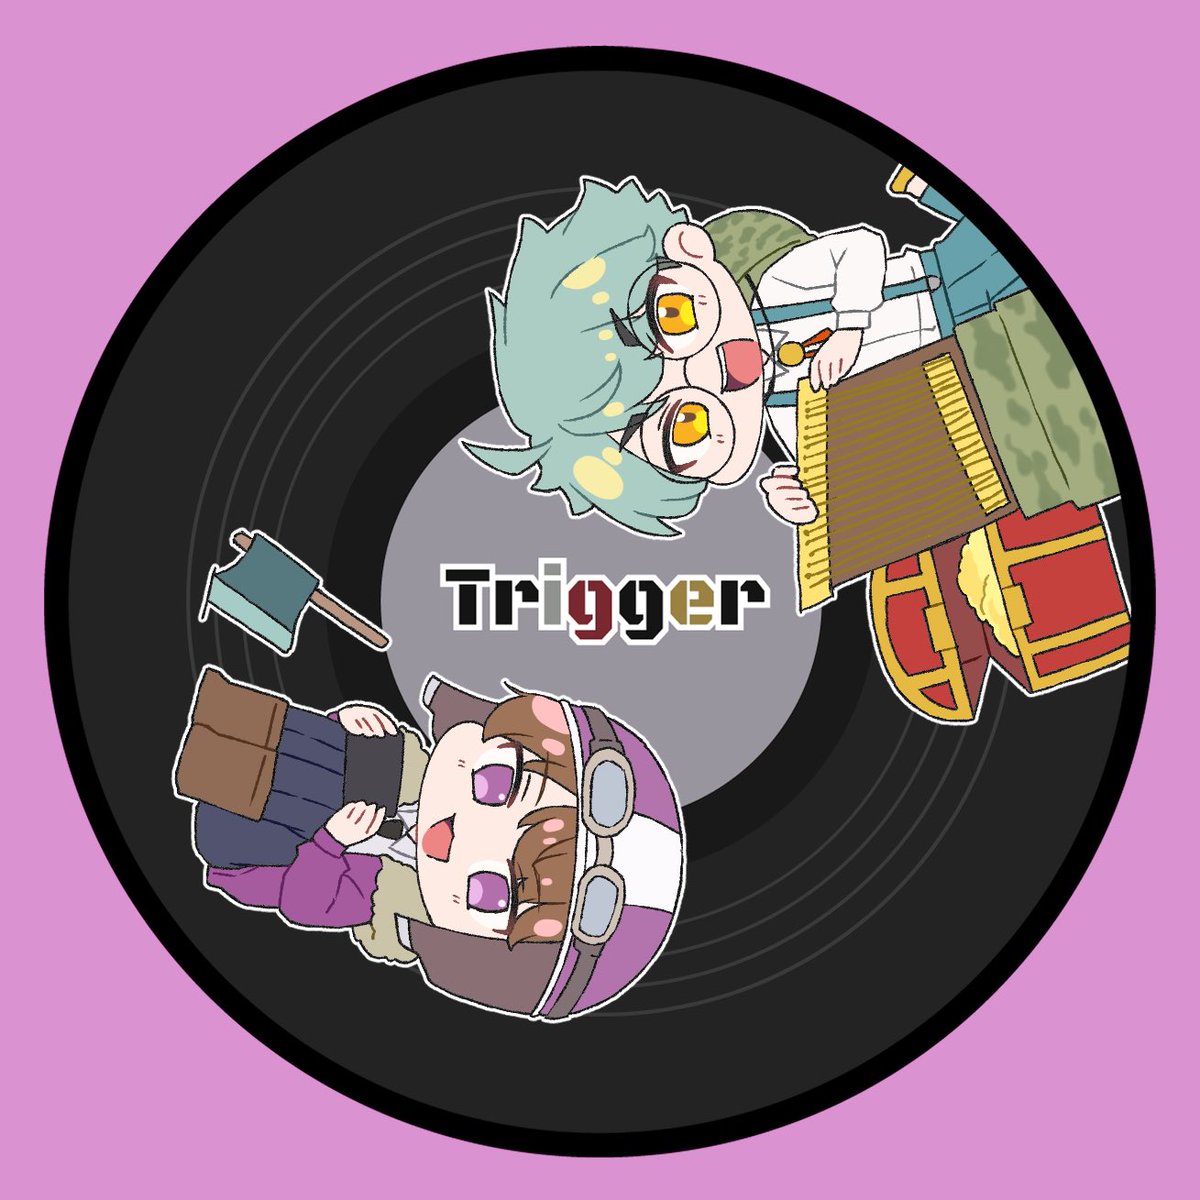 Triggerレコード  vol.5

シンセ＆カーヌーン

#wrwrd_FA #wrwrdFA